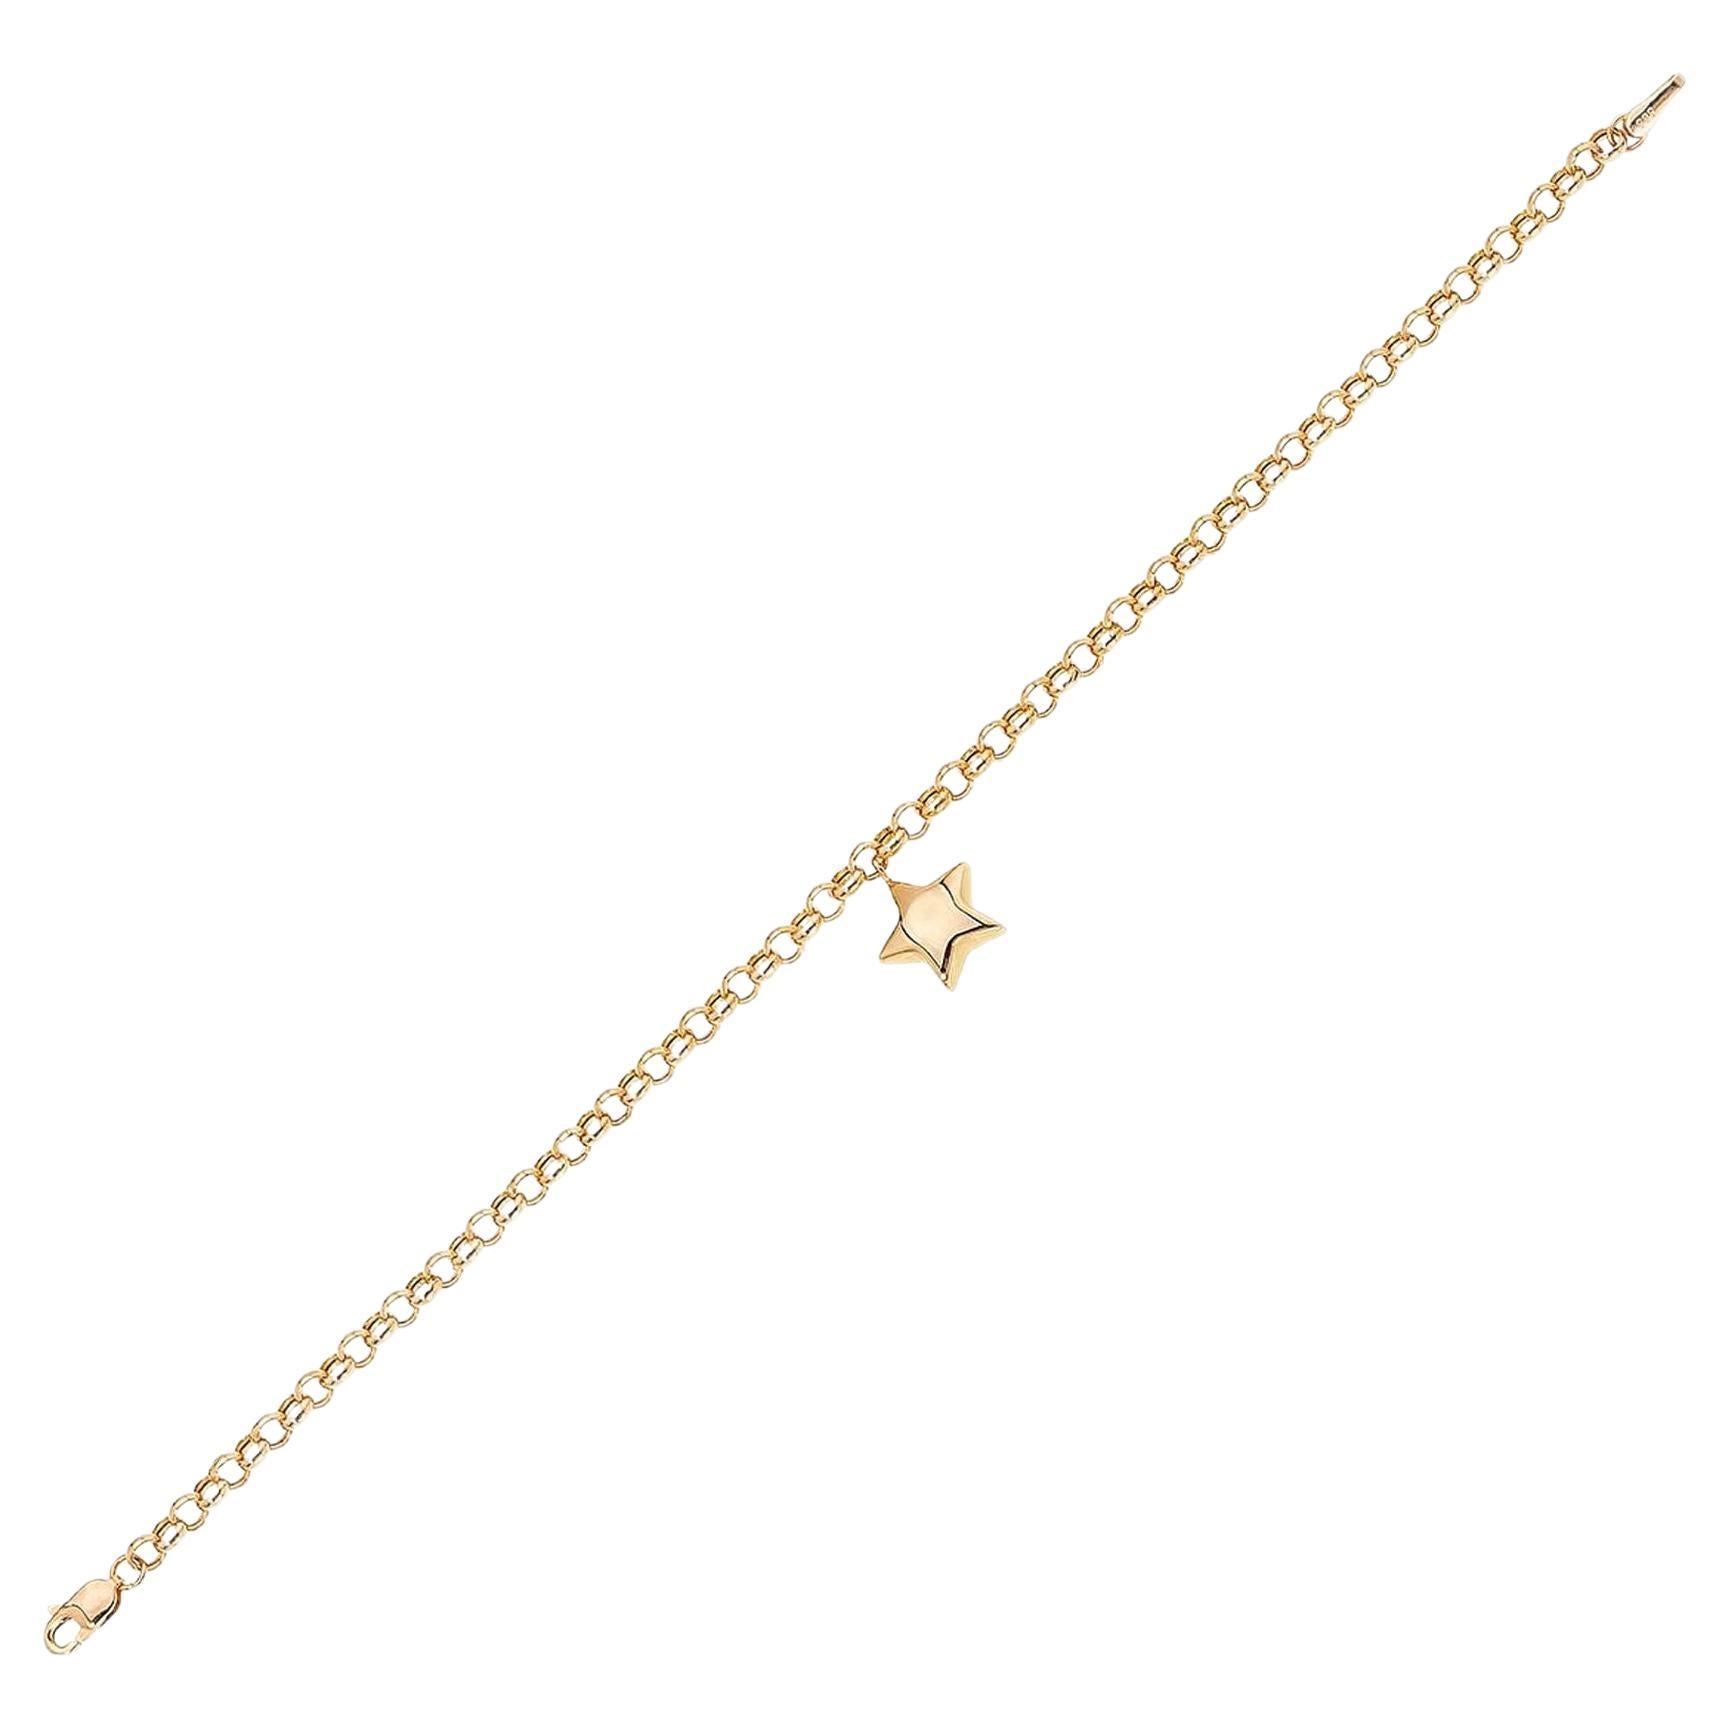 14 karat gold Star Charm Bracelet. Chain Bracelet with Star shaped pendant.